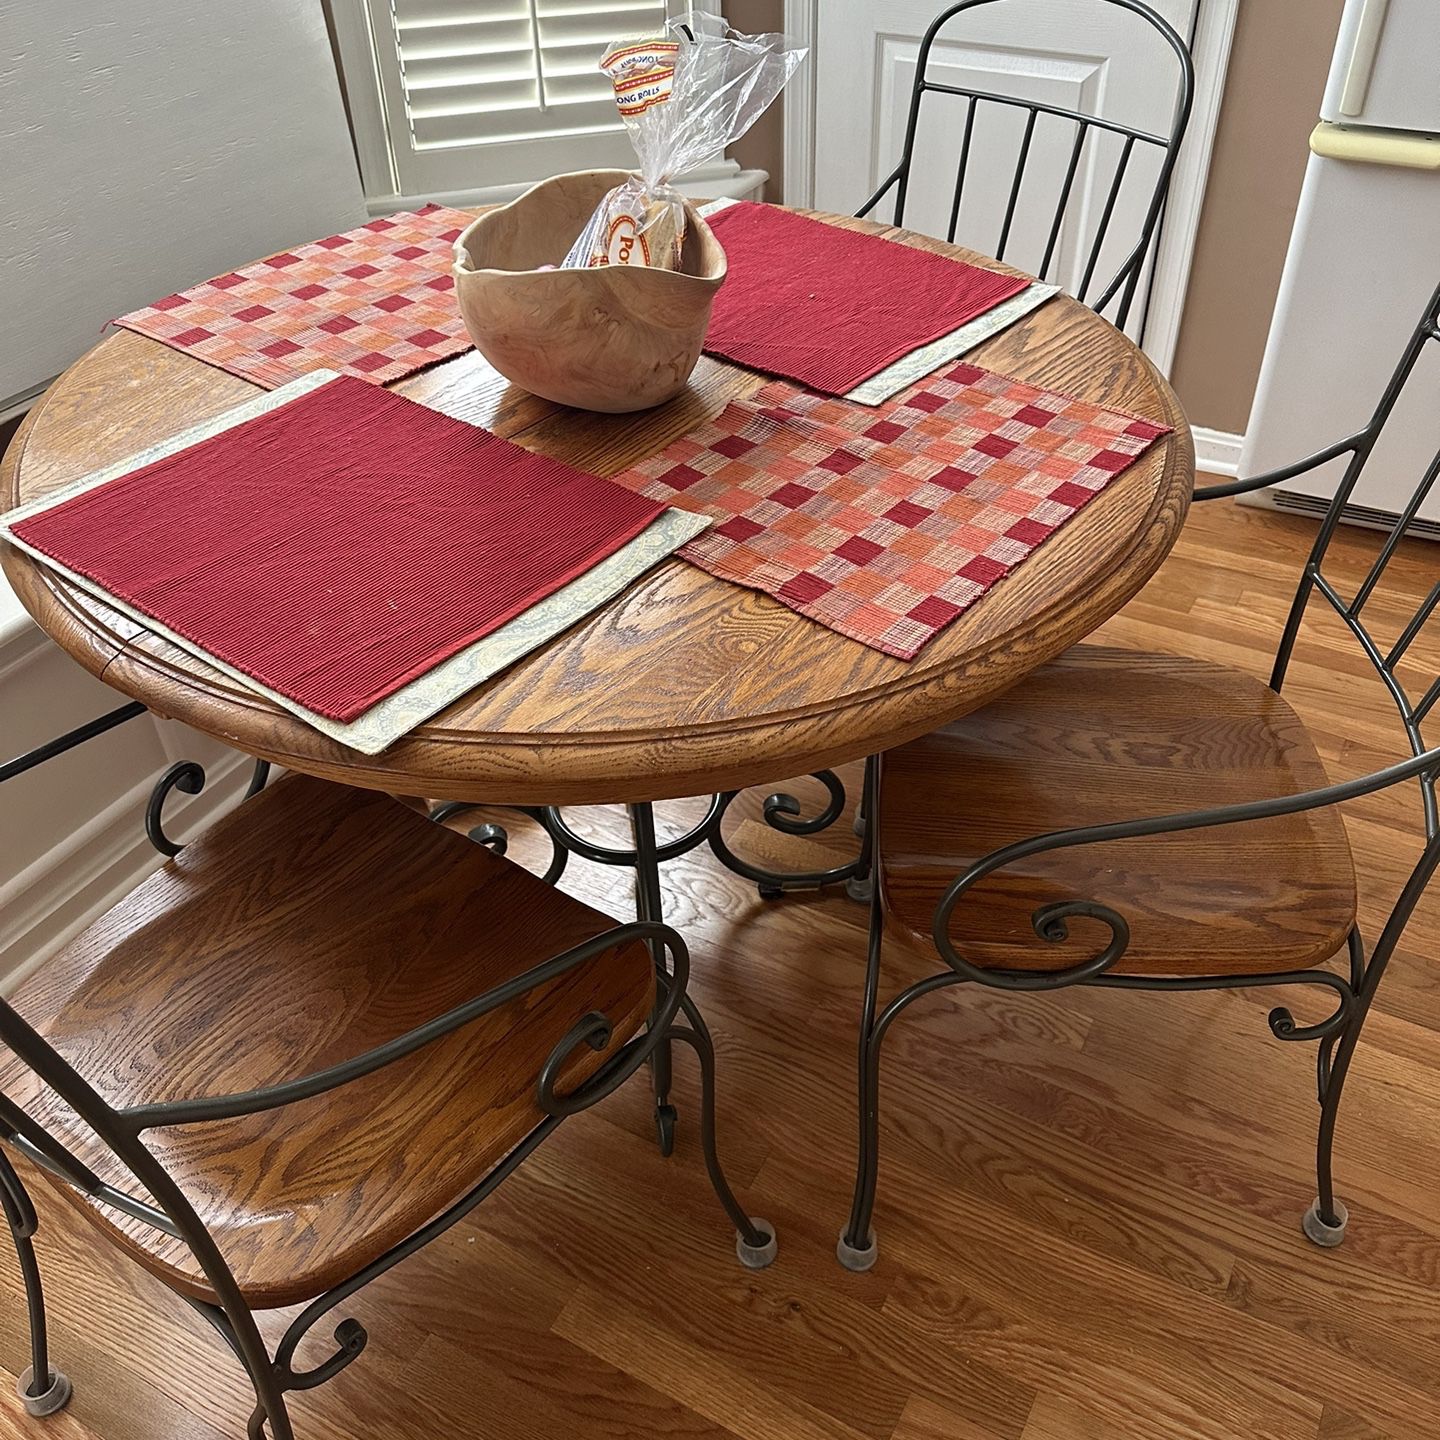 Solid oak Table